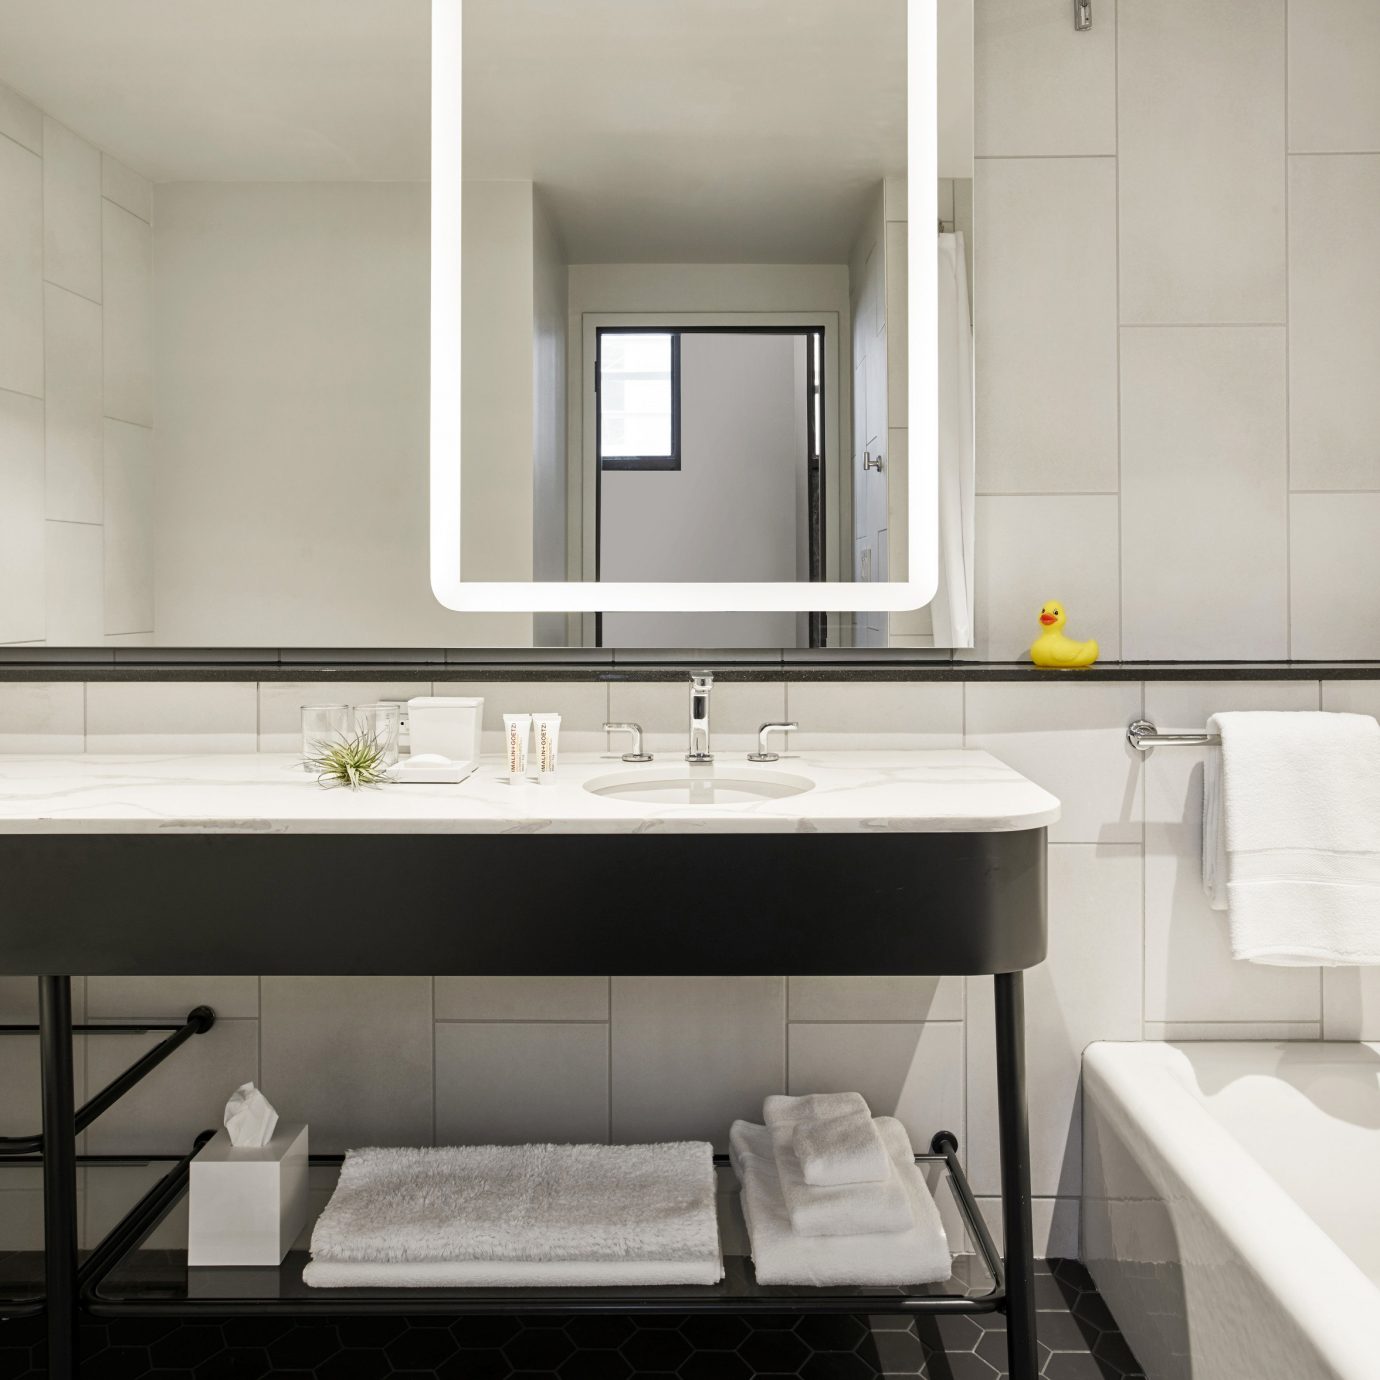 bathroom white property home sink flooring Kitchen tile bathtub tiled